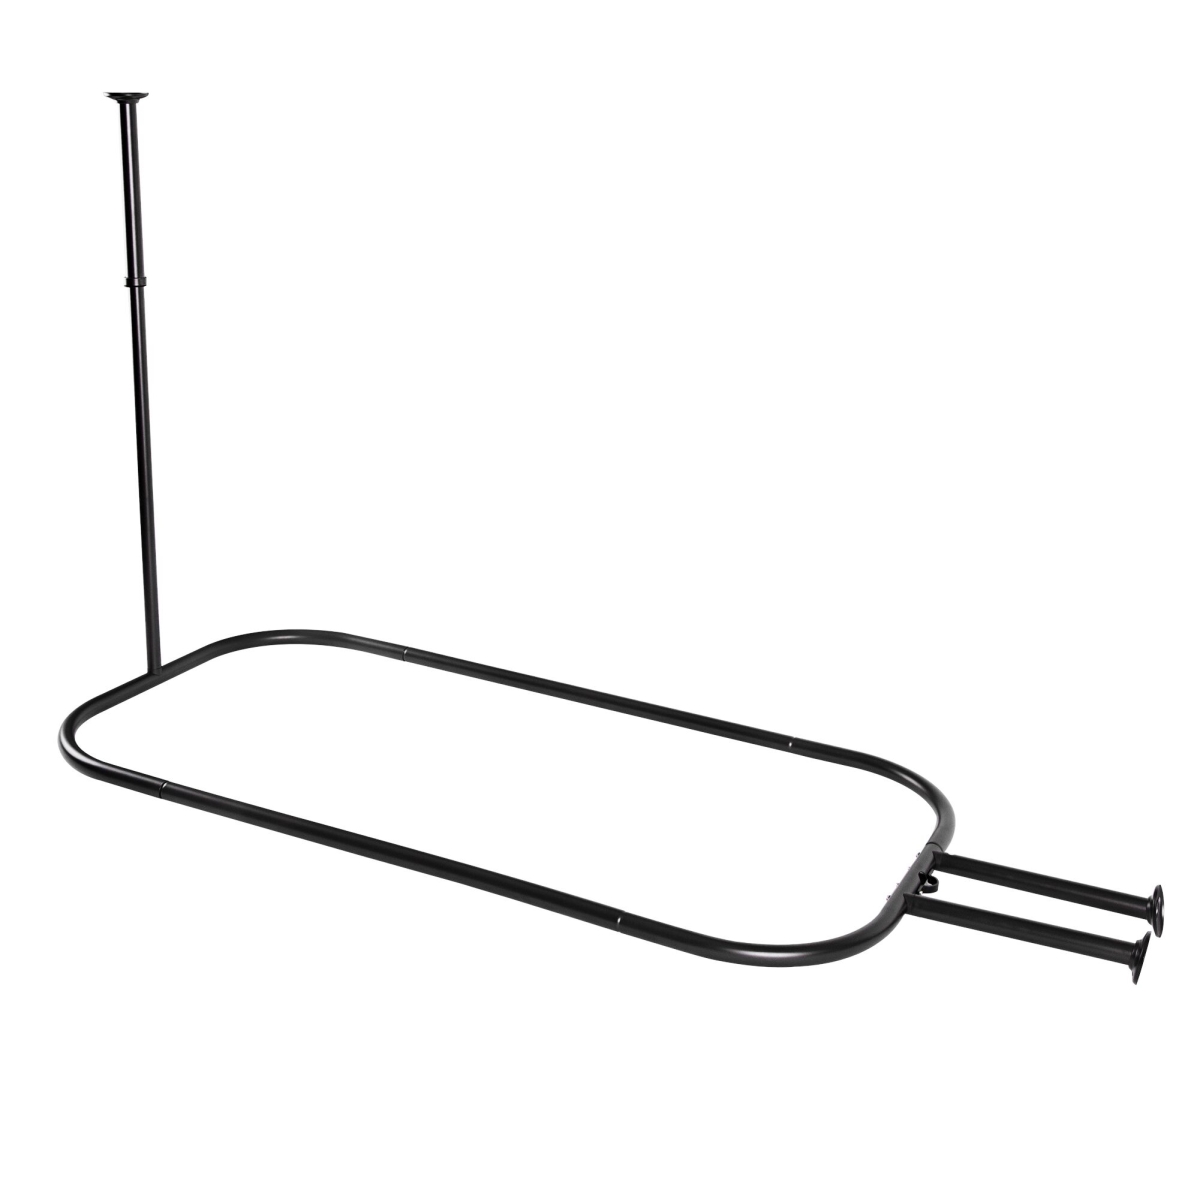 Hp1bk Hoop Shower Rod For Clawfoot Tub - Black